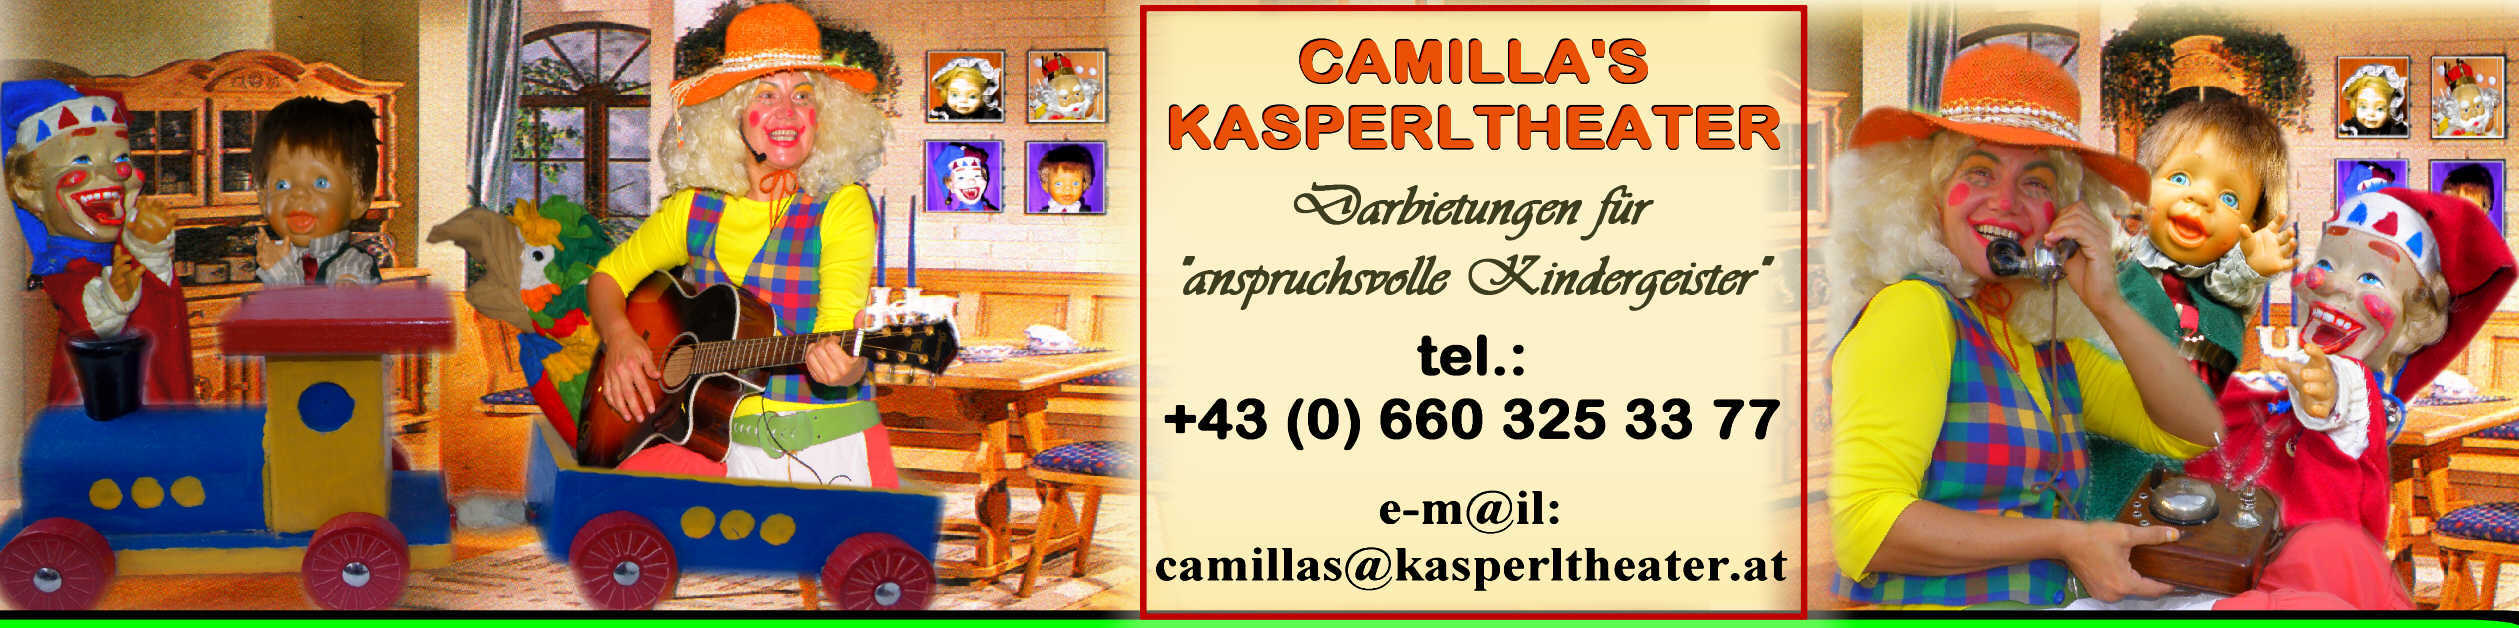 Homepage Briefkop0f Camillas Kasperltheater - www.kasperltheater.at